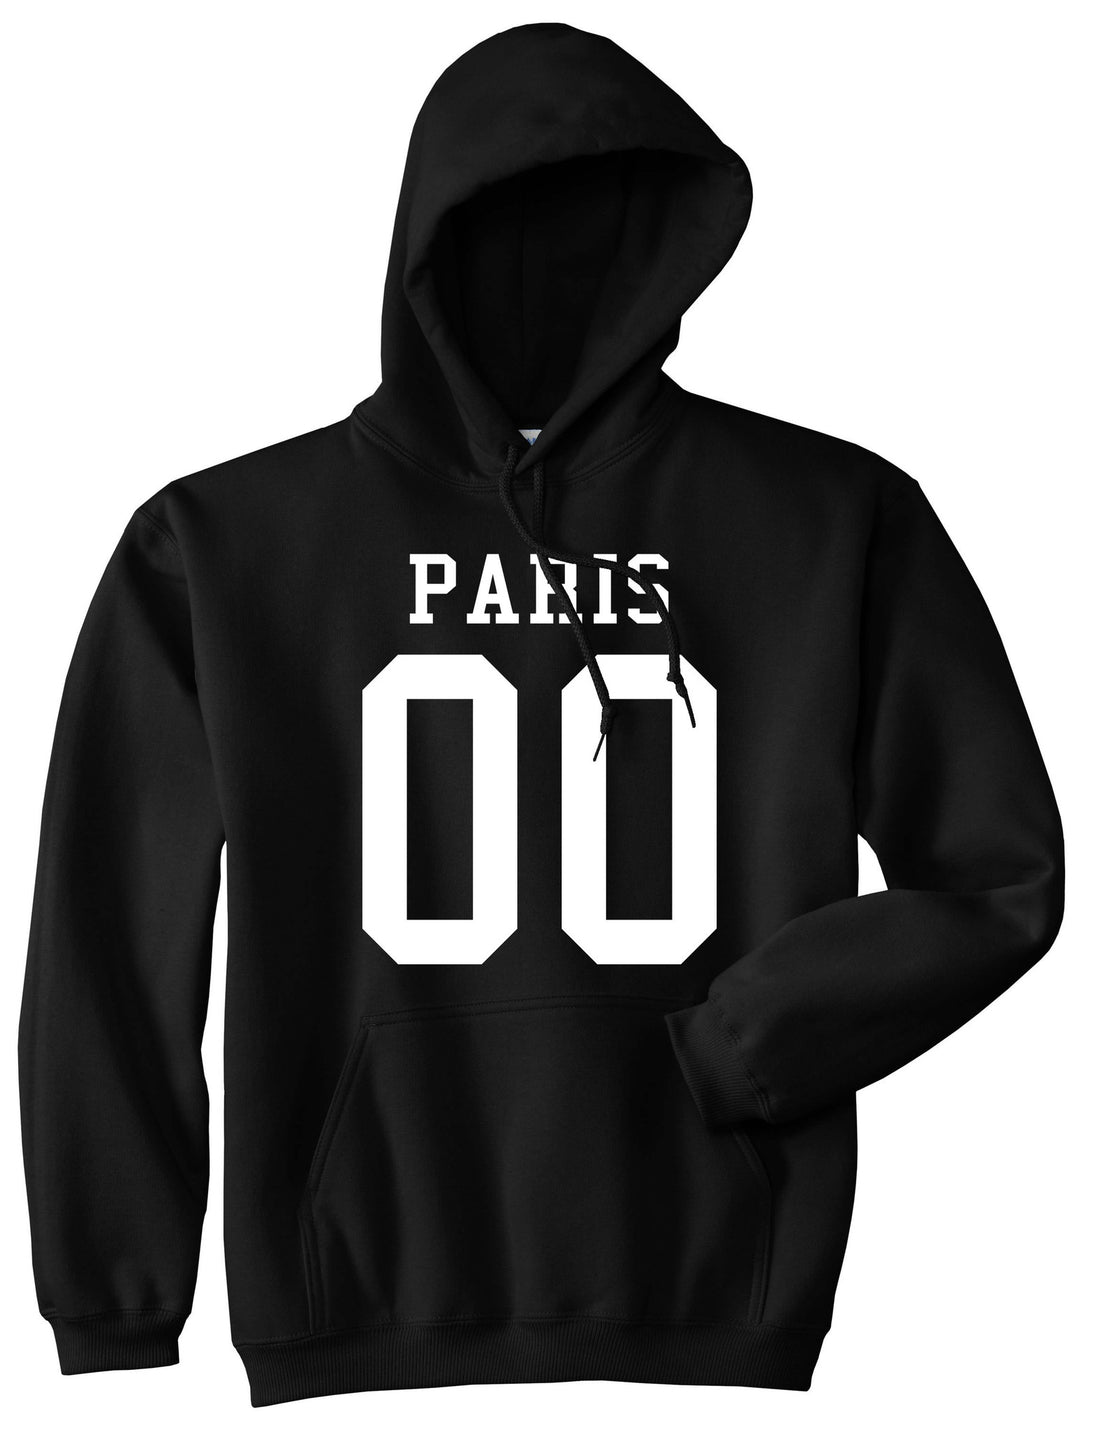 Paris Team 00 Jersey Pullover Hoodie in Black By Kings Of NY